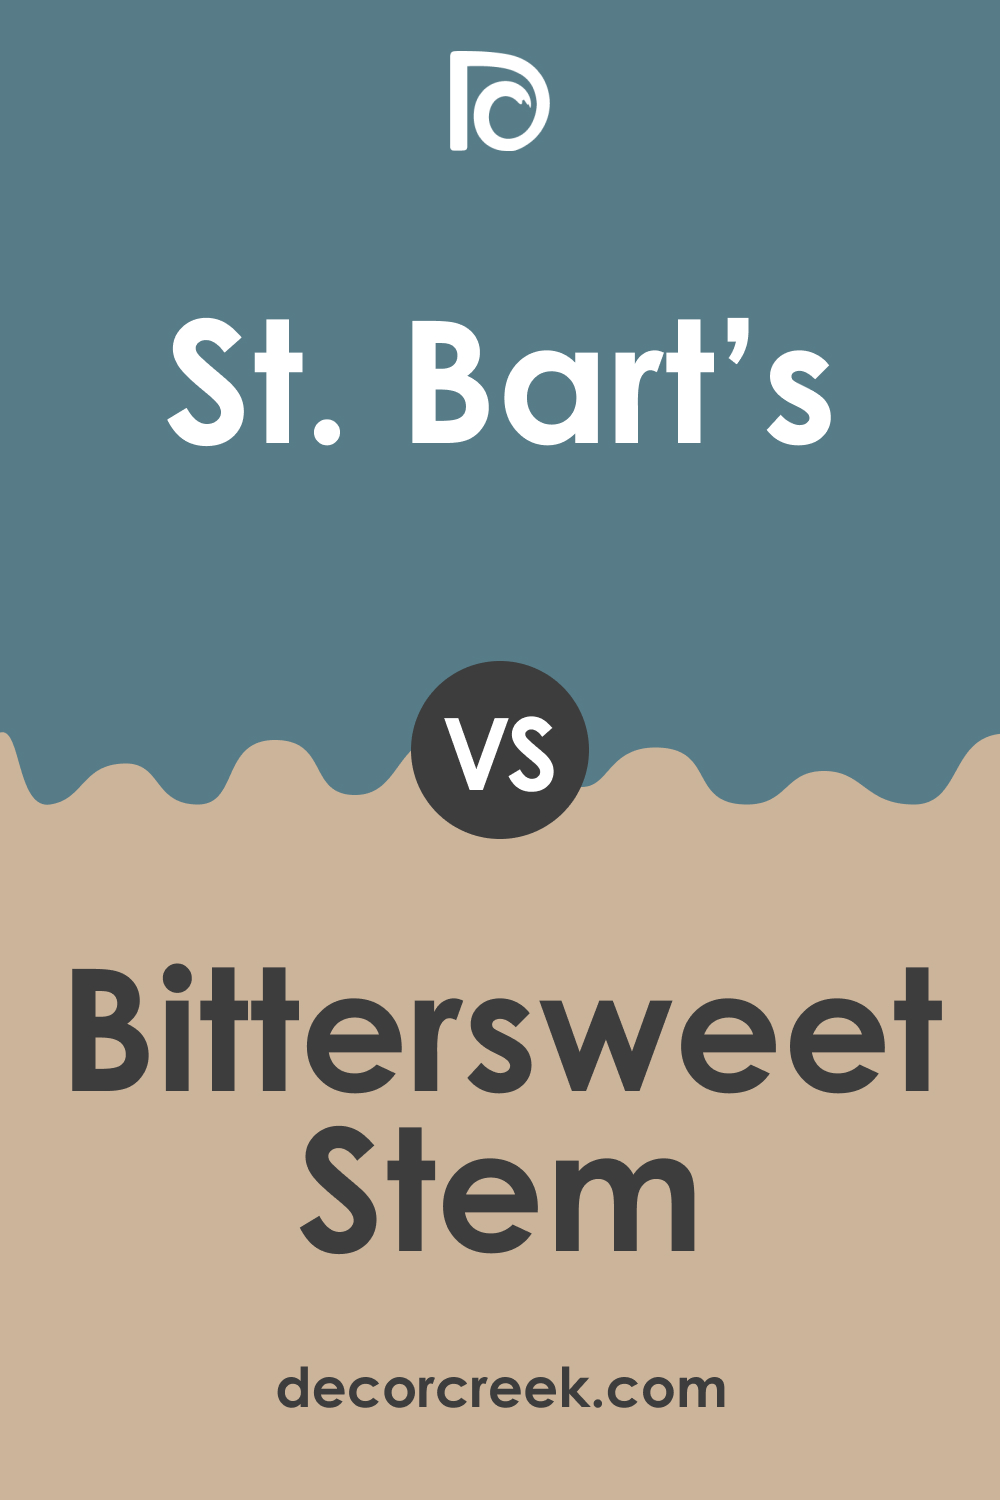 SW 7614 St. Bart’s vs. SW 7536 Bittersweet Stem